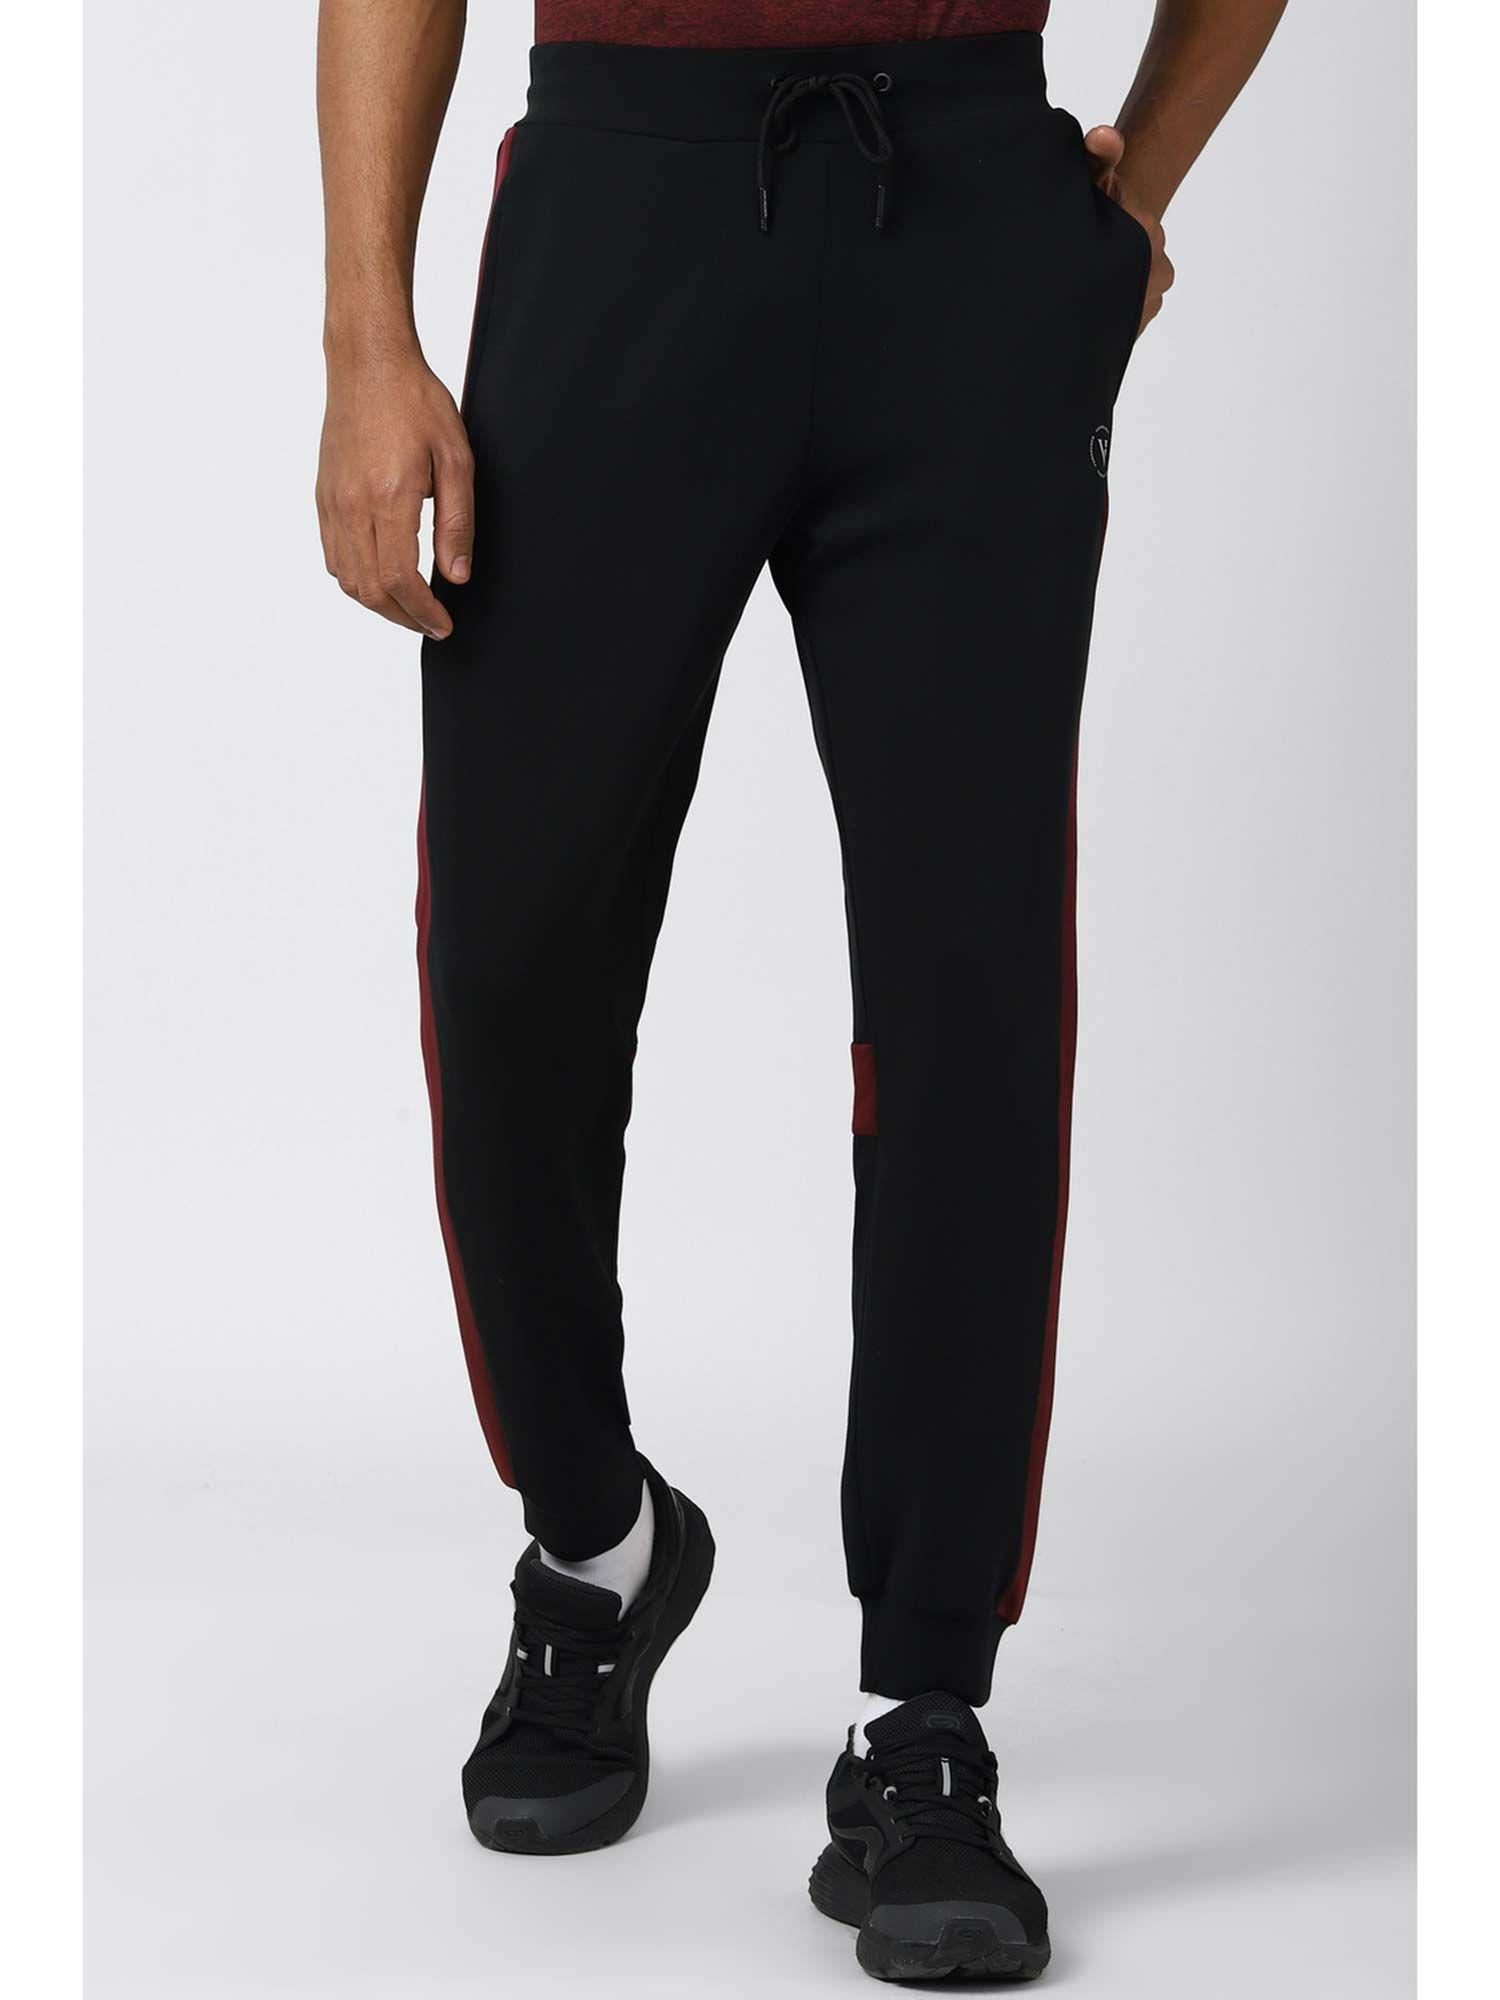 black jogger pants